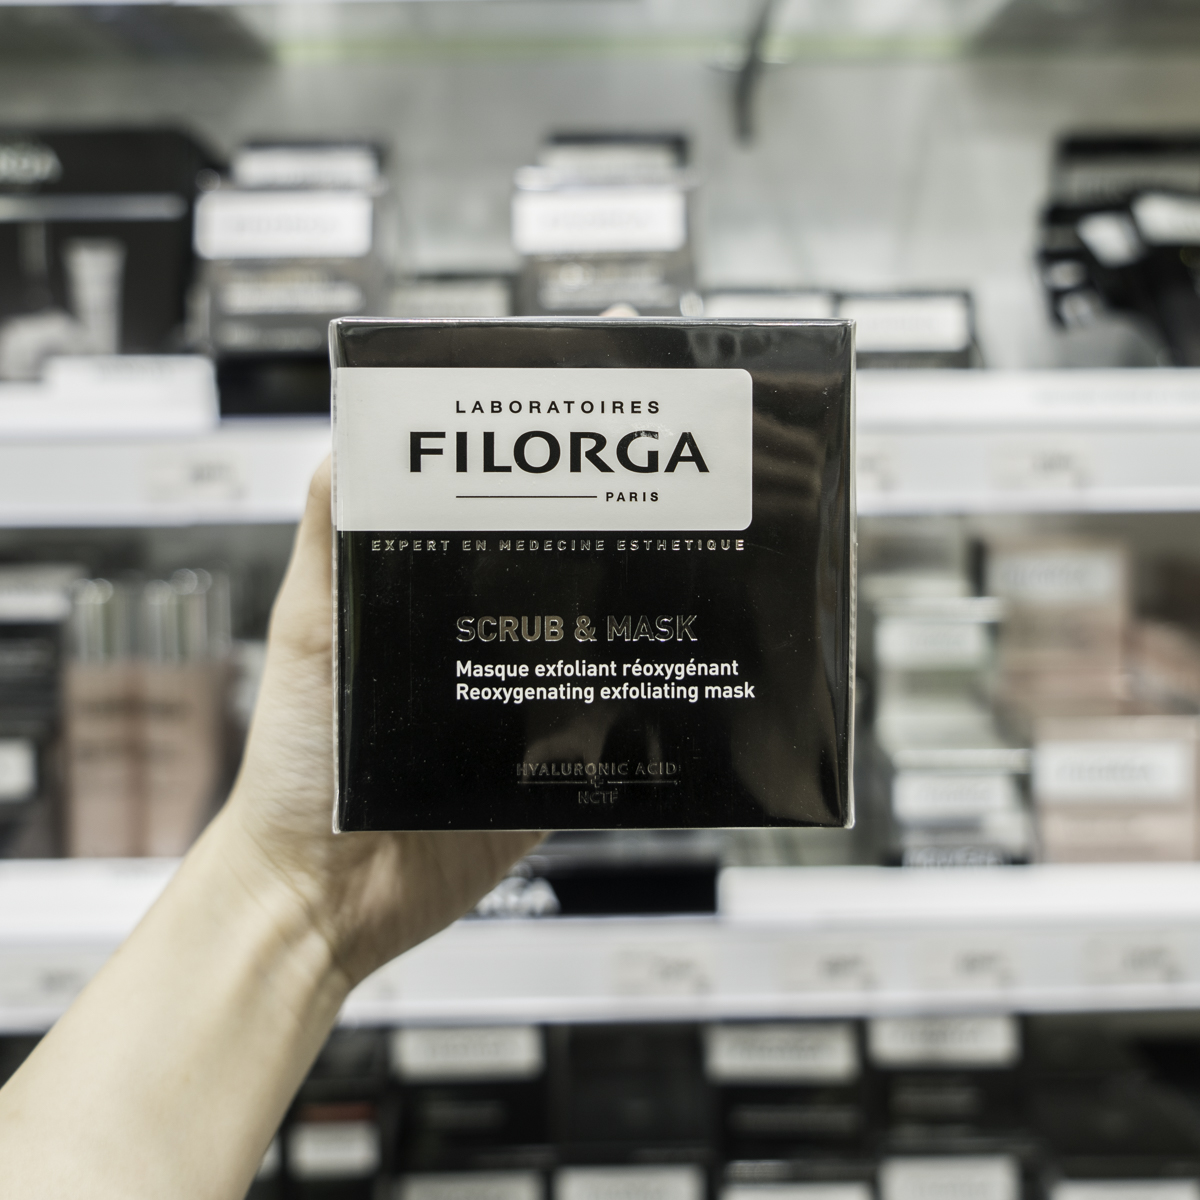 mua sản phẩm của Filorga ở Paris